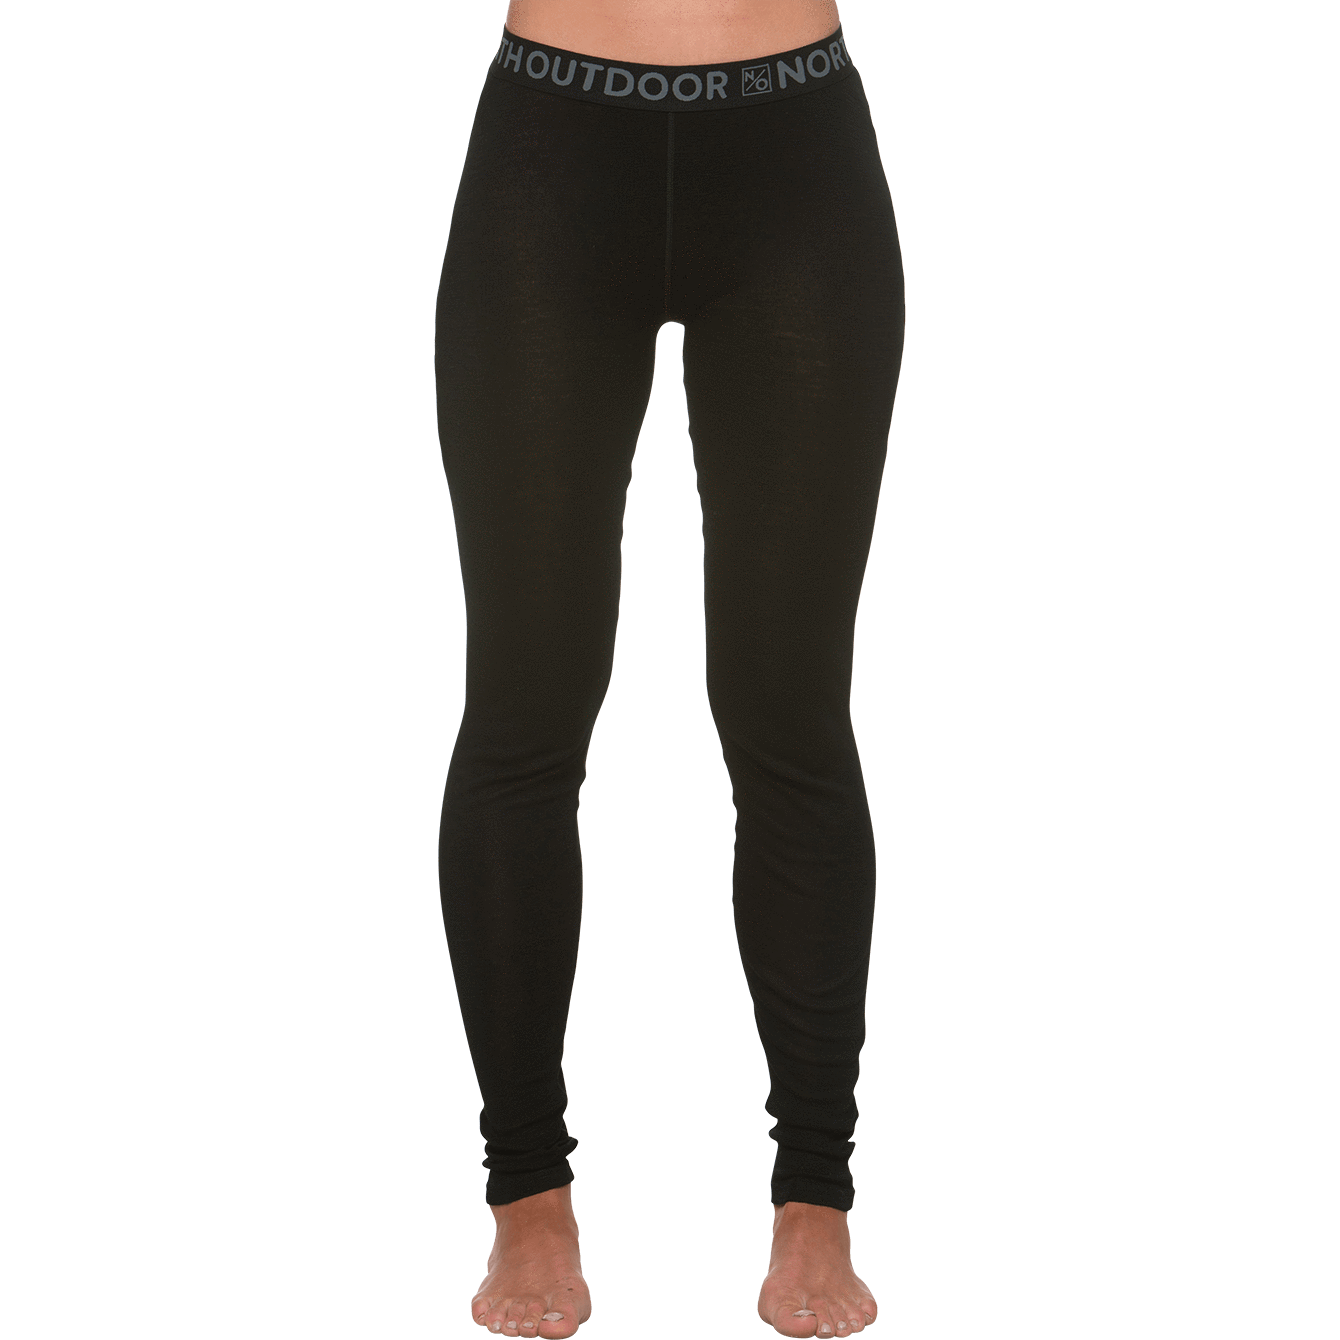 North Outdoor Women's Base Layer Pants - 100 % Merino Wool ACTIVE 210, Black / XS